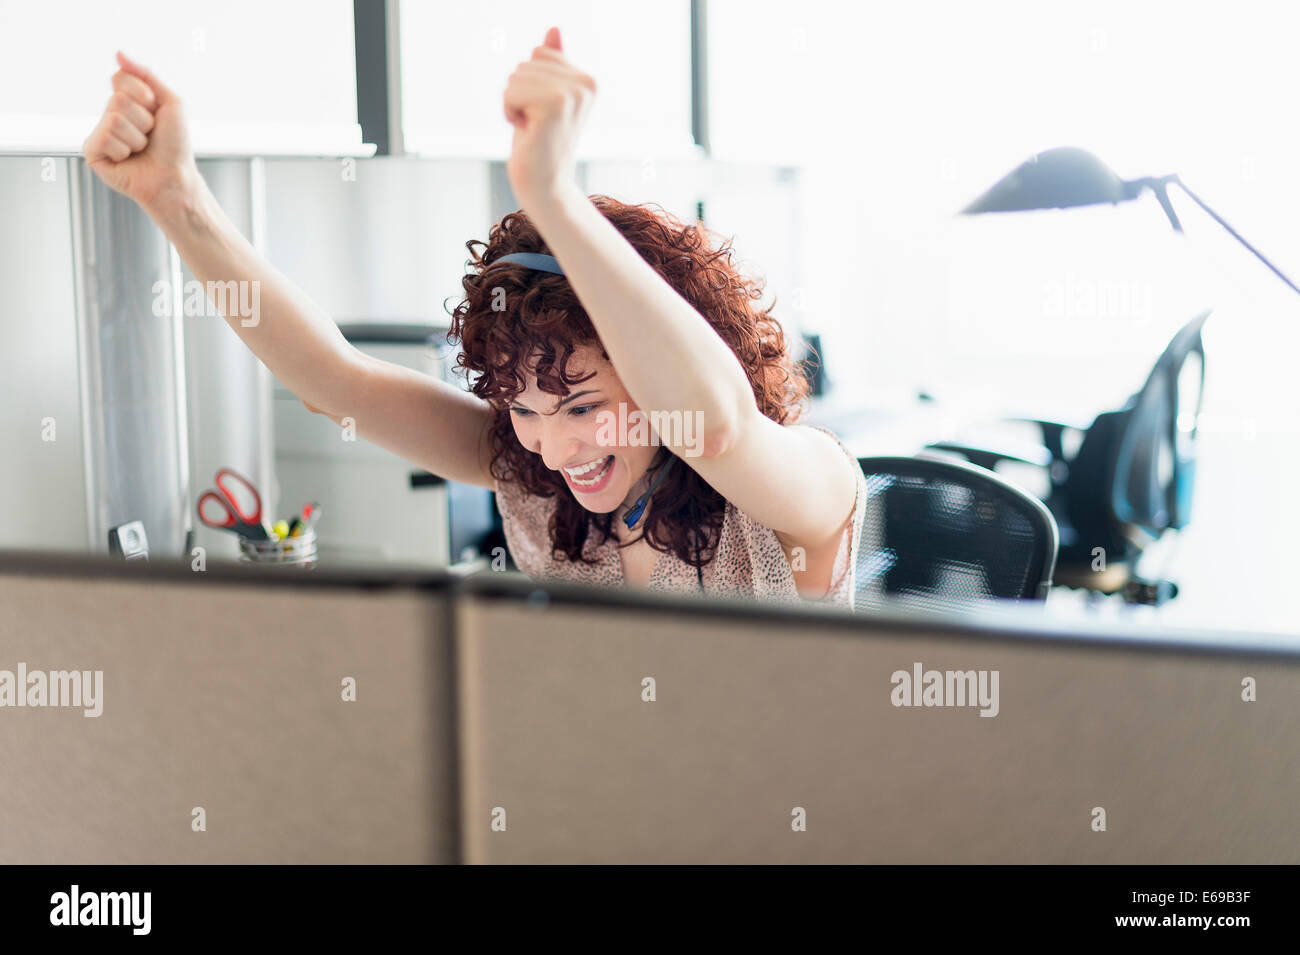 Hispanic businesswoman cheering in office Stock Photo